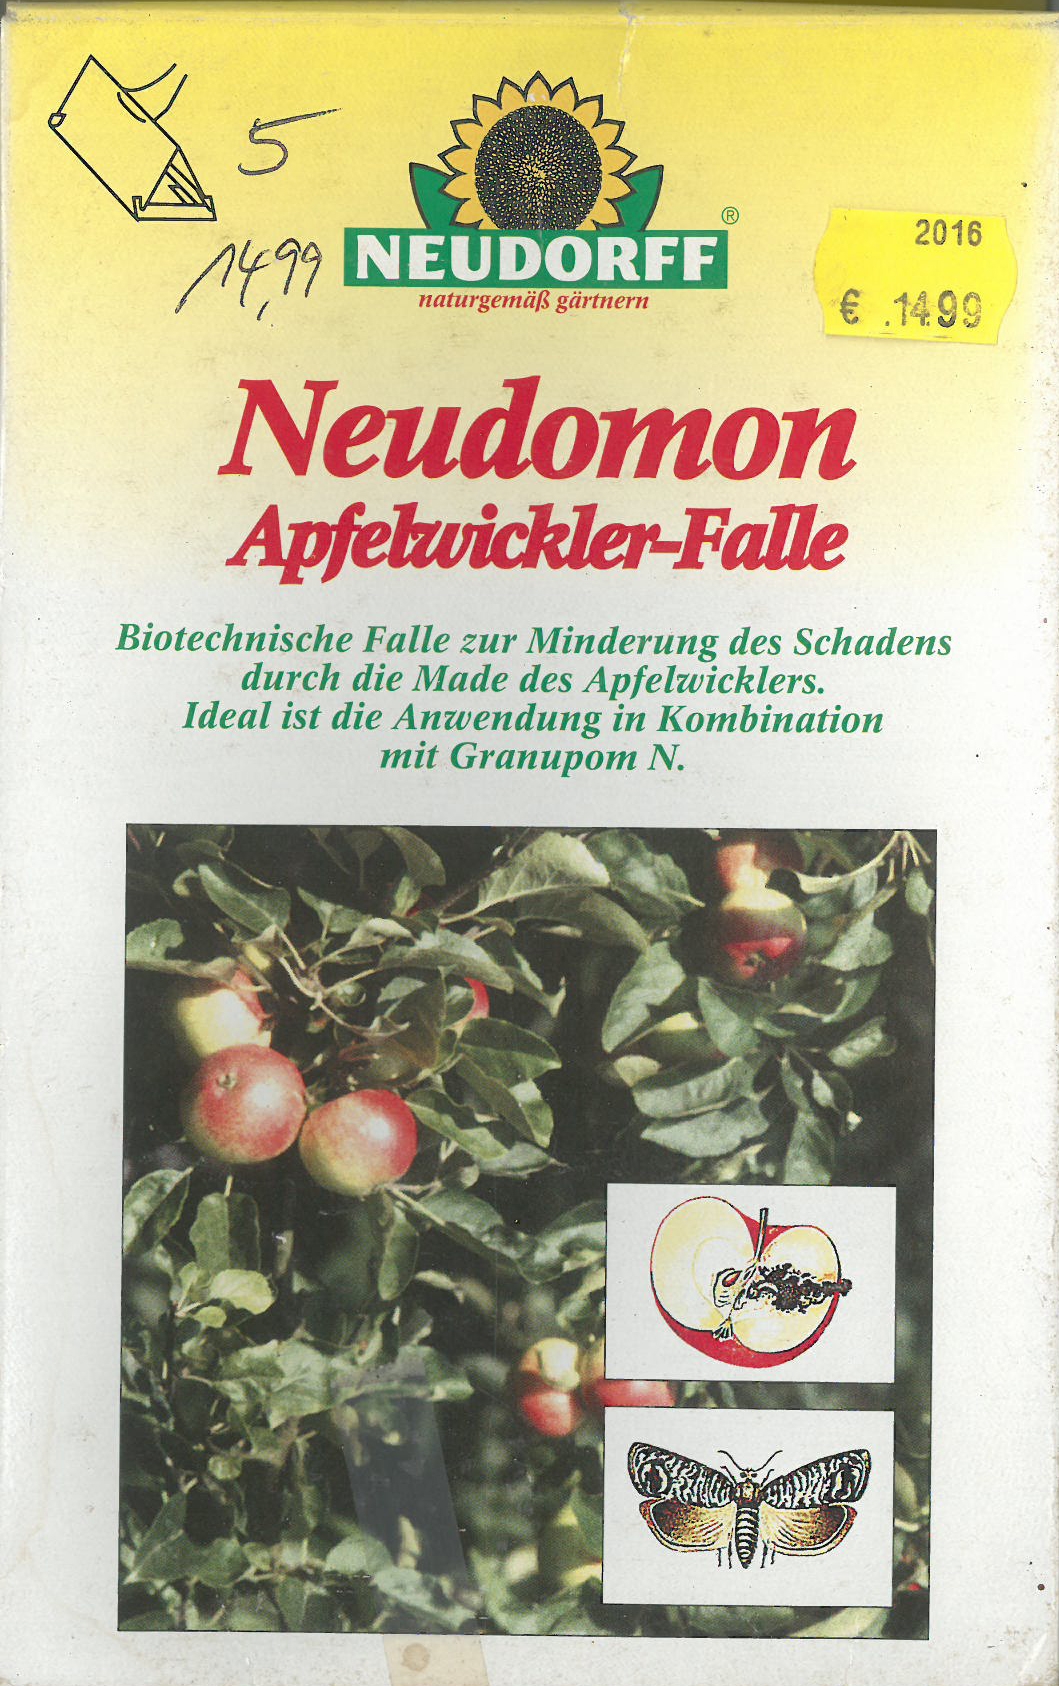 Apfelmaden-Wicklerfalle Neudorf